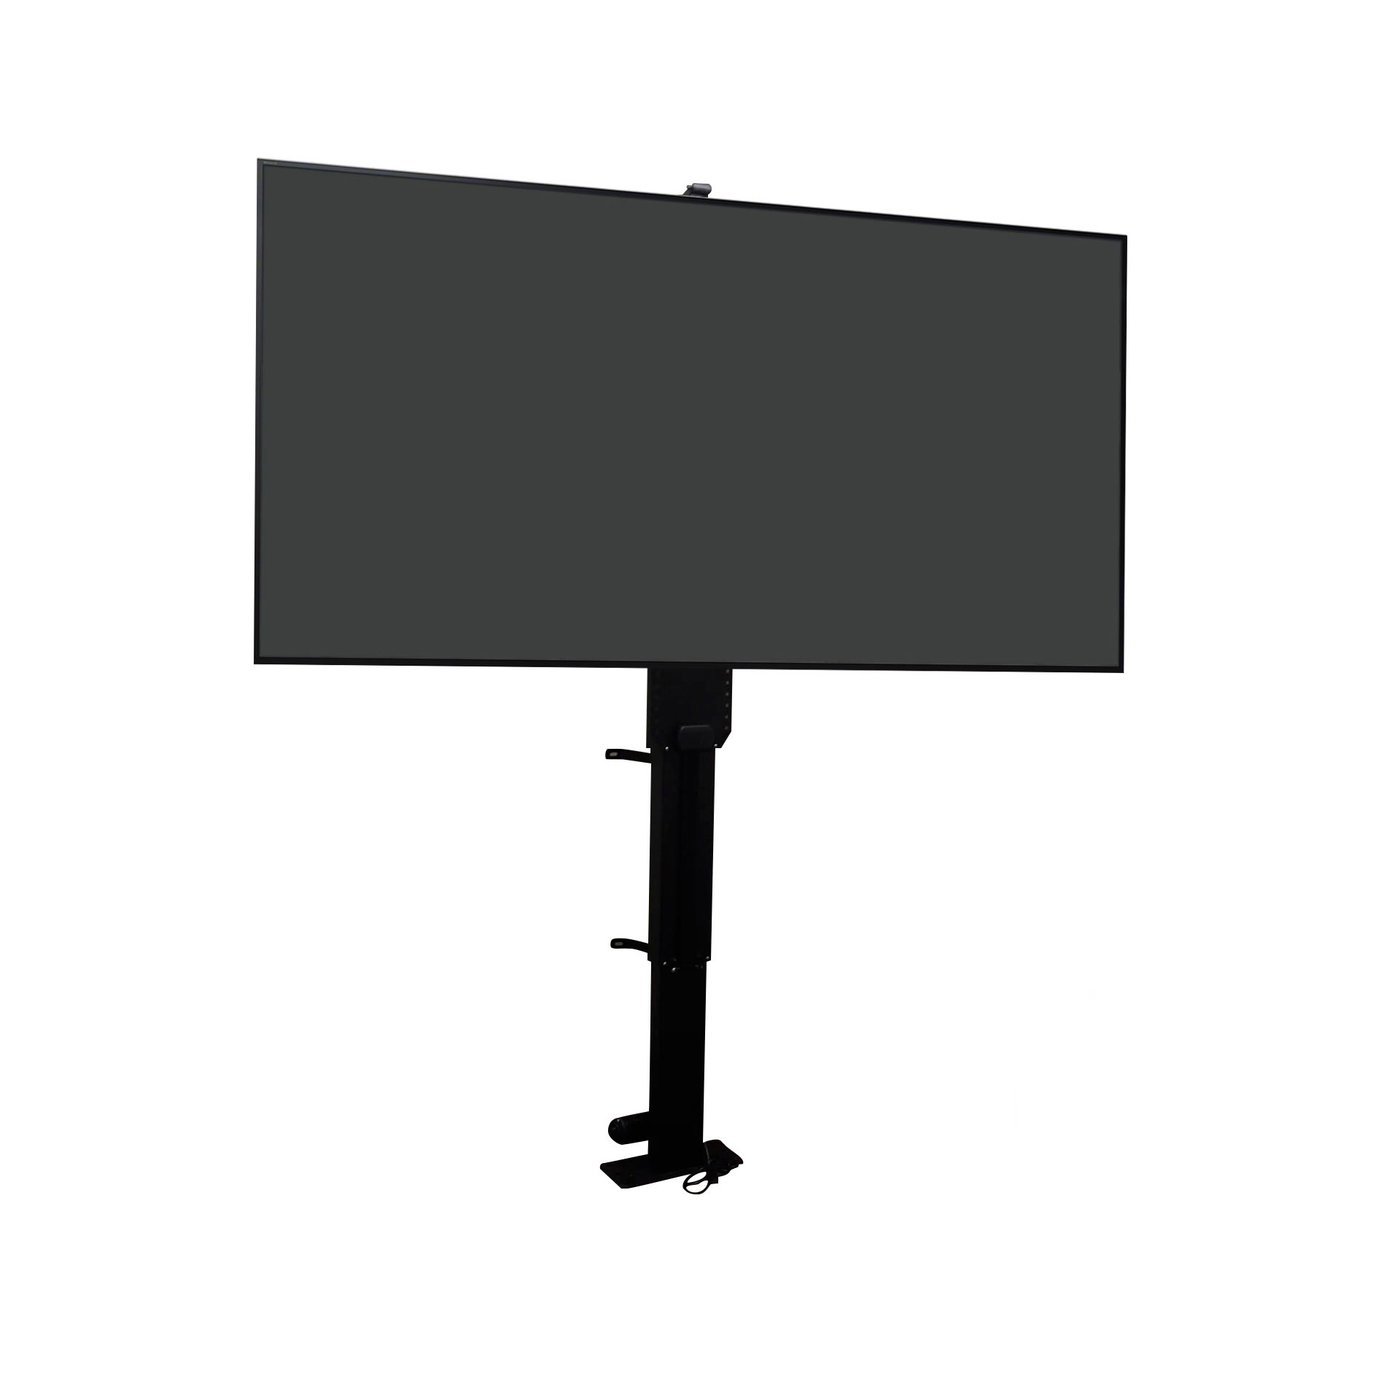 Touchstone Whisper Lift PRO XL 23601 Advanced Lift Mechanism for 85" Flat screen TVs - TS-23601 - Avanquil